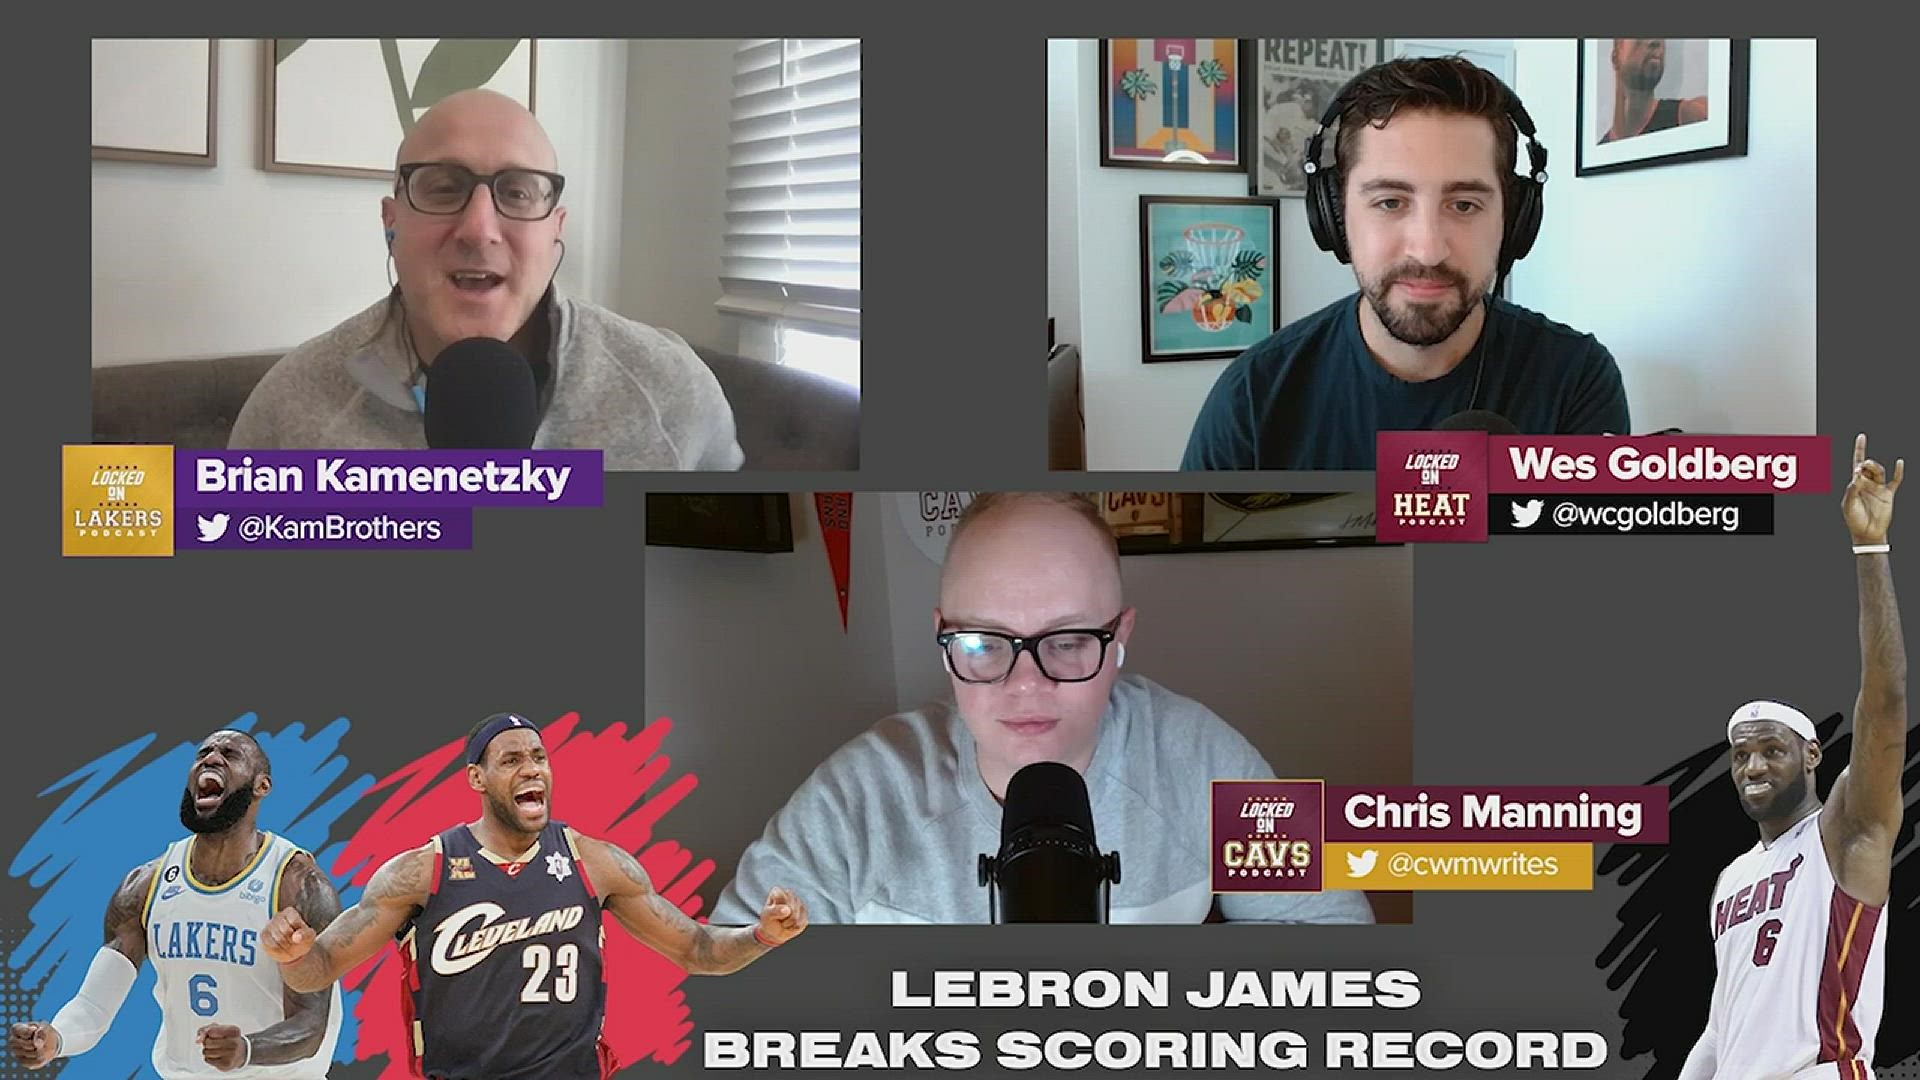 Kareem Abdul Jabbar and his goggles - Does LeBron James need them? 